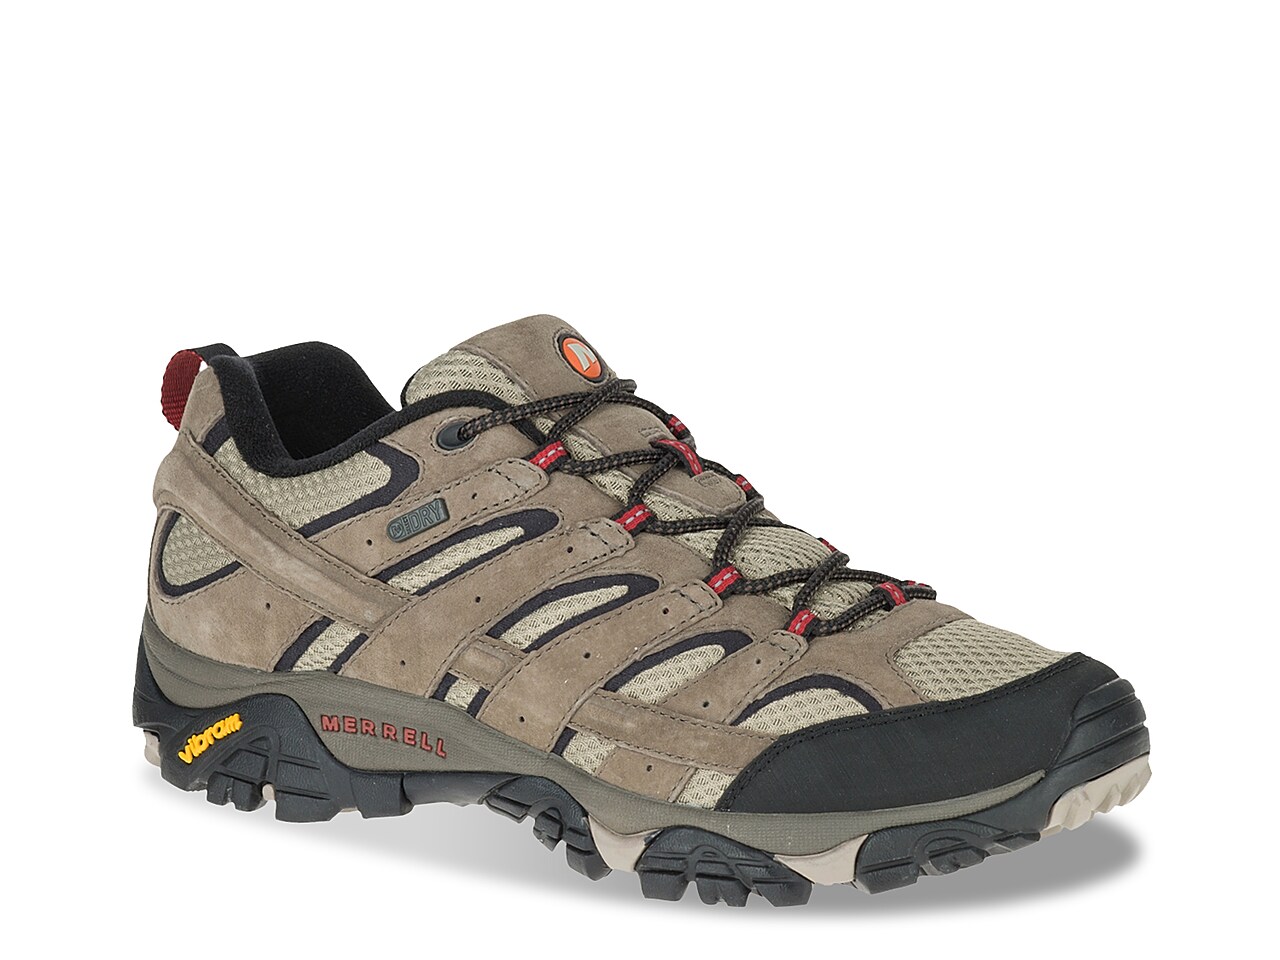 Details about   Men's Merrell MOAB Boulder Hiking Shoes Size 9 Brown